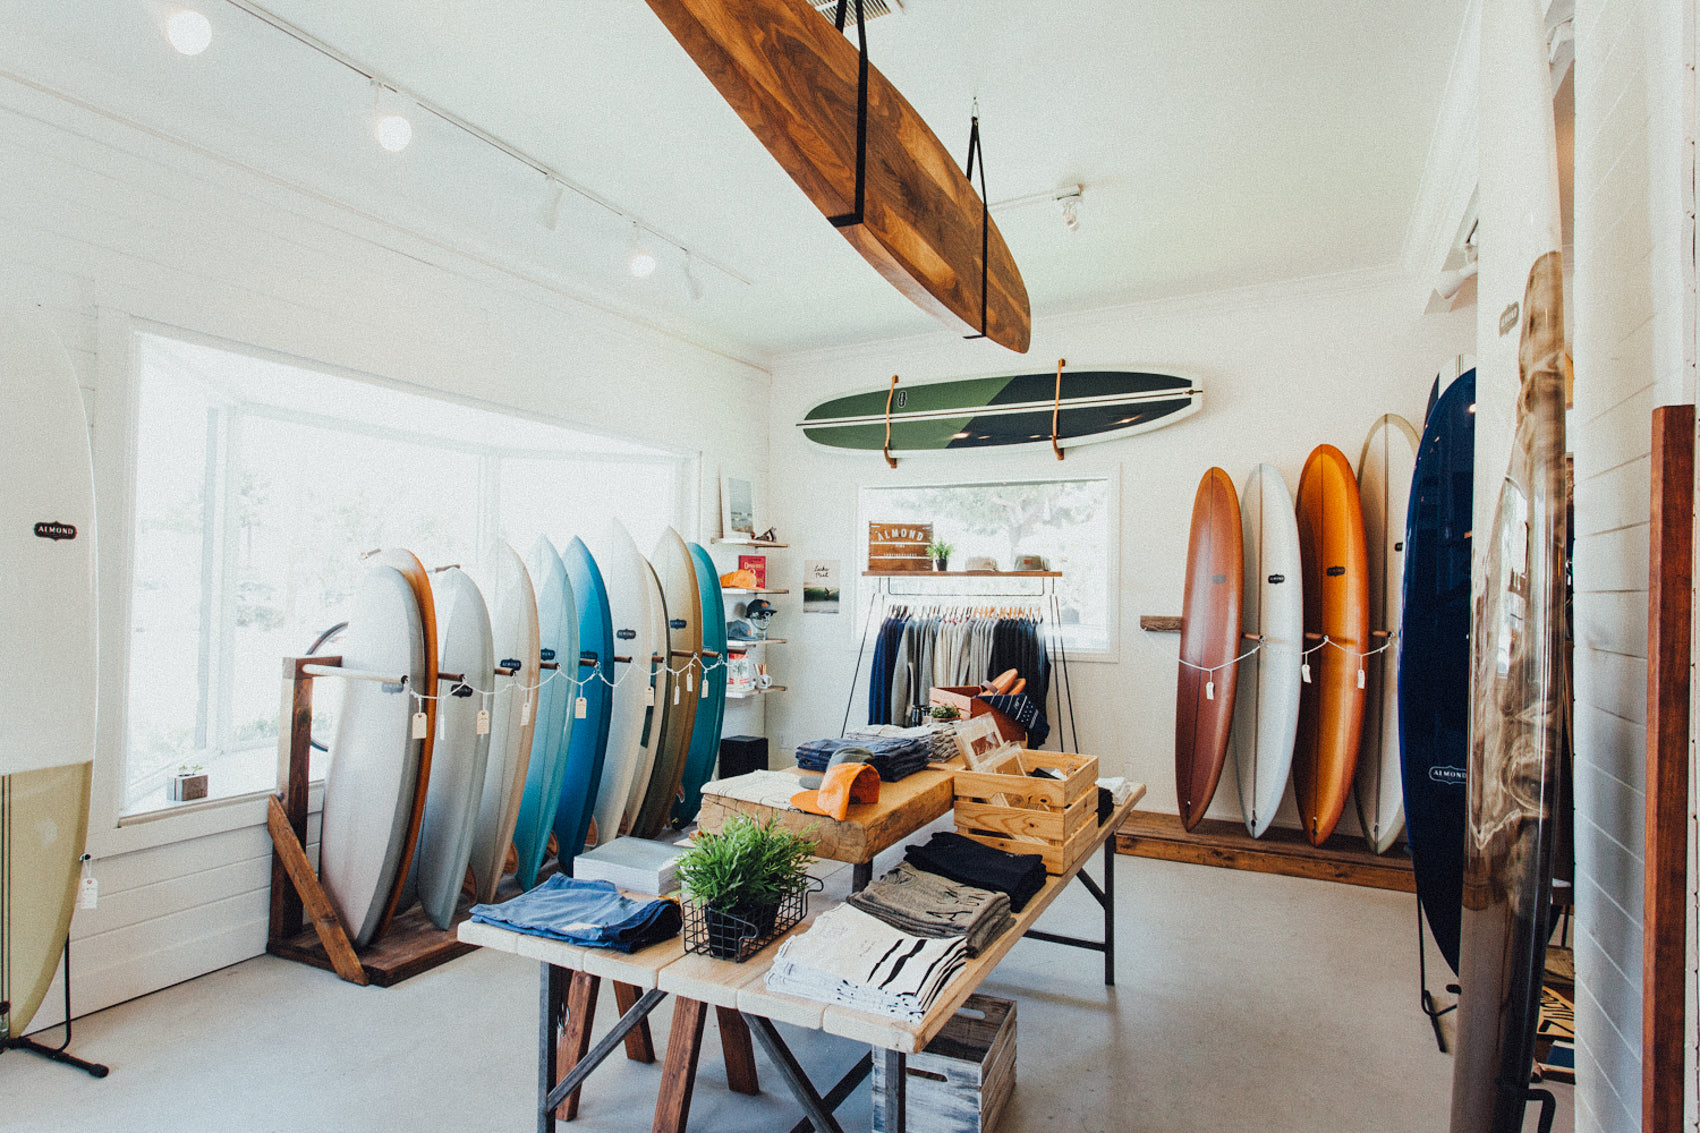 Almond Surfboards Japan